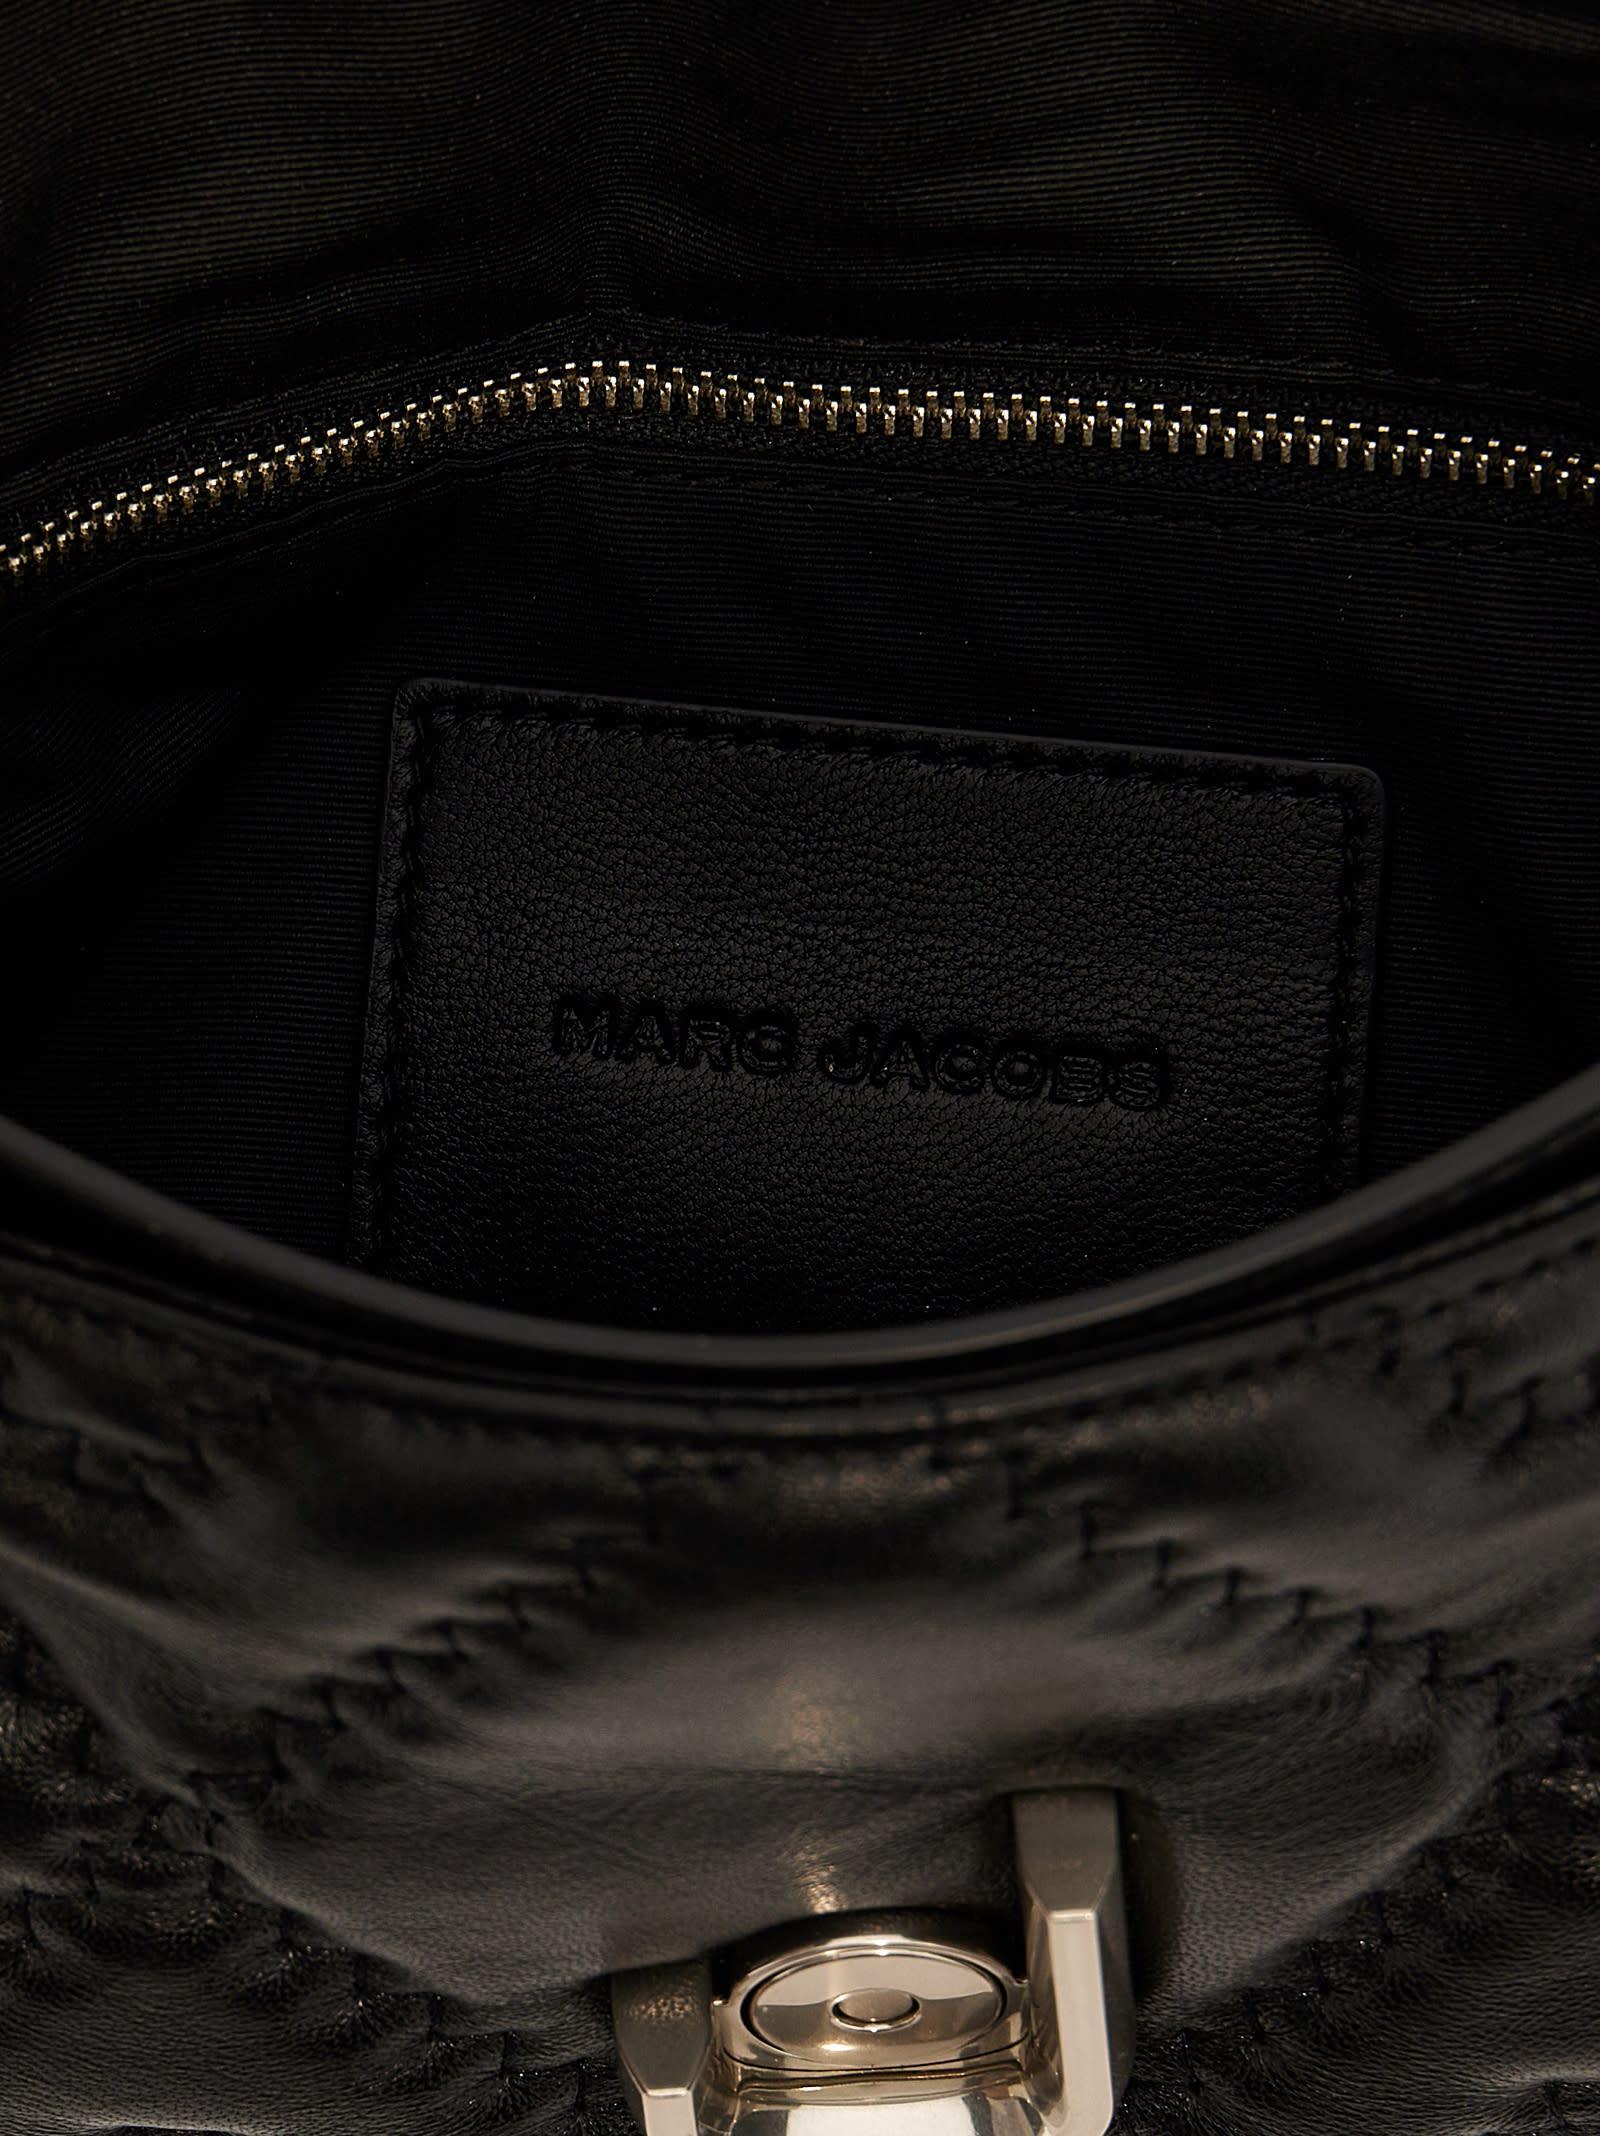 The Quilted Leather J Marc Shoulder Bag, Marc Jacobs